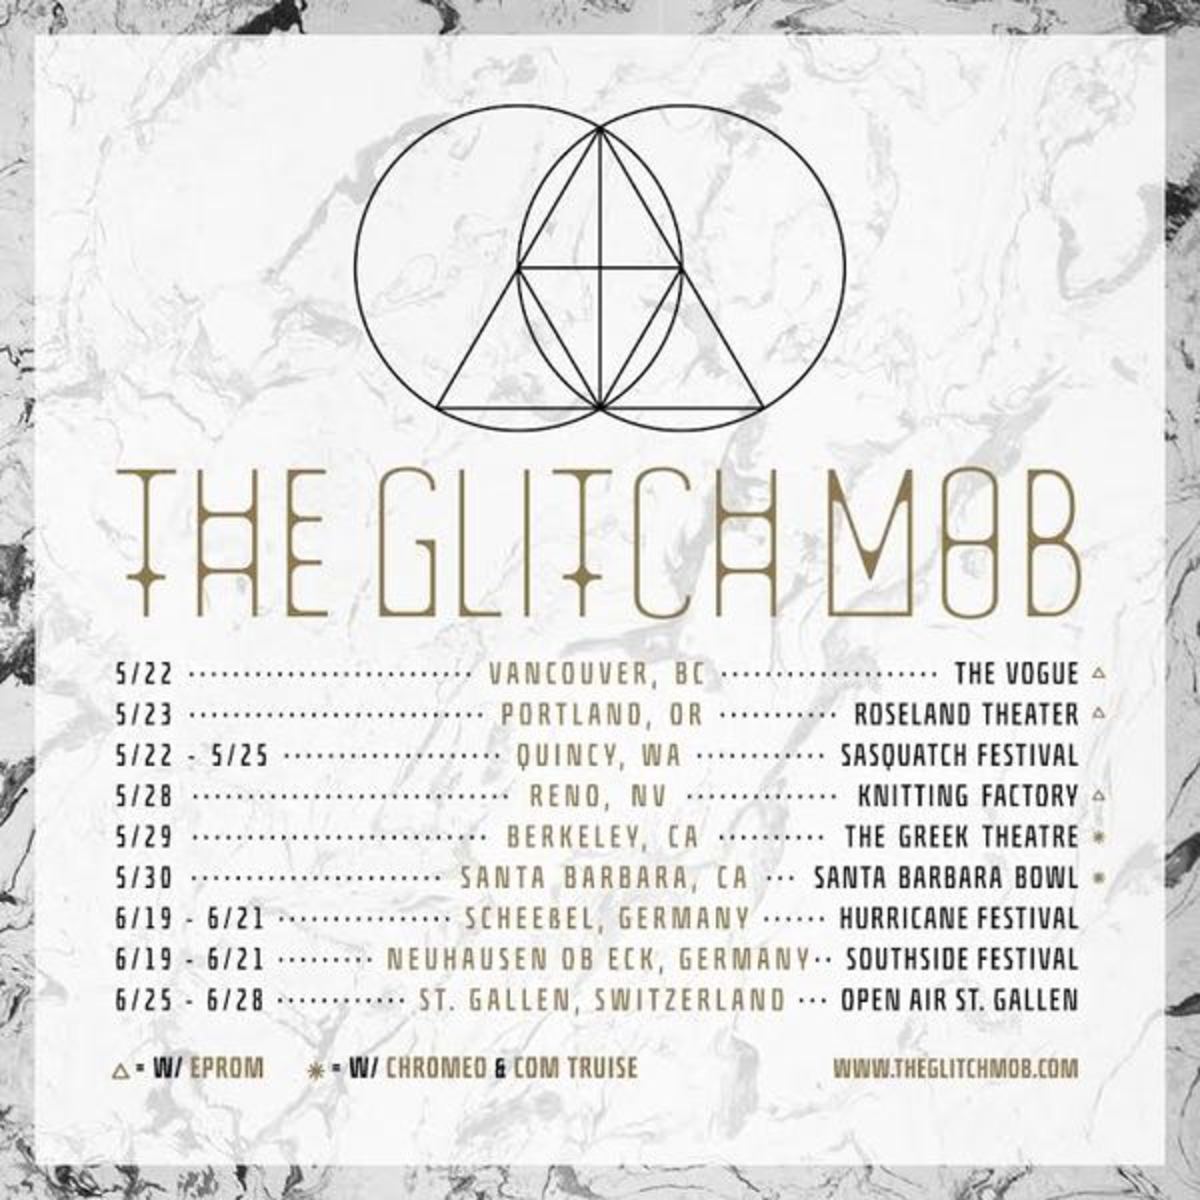 The Glitch Mob Drop New LP Ahead Of Tour